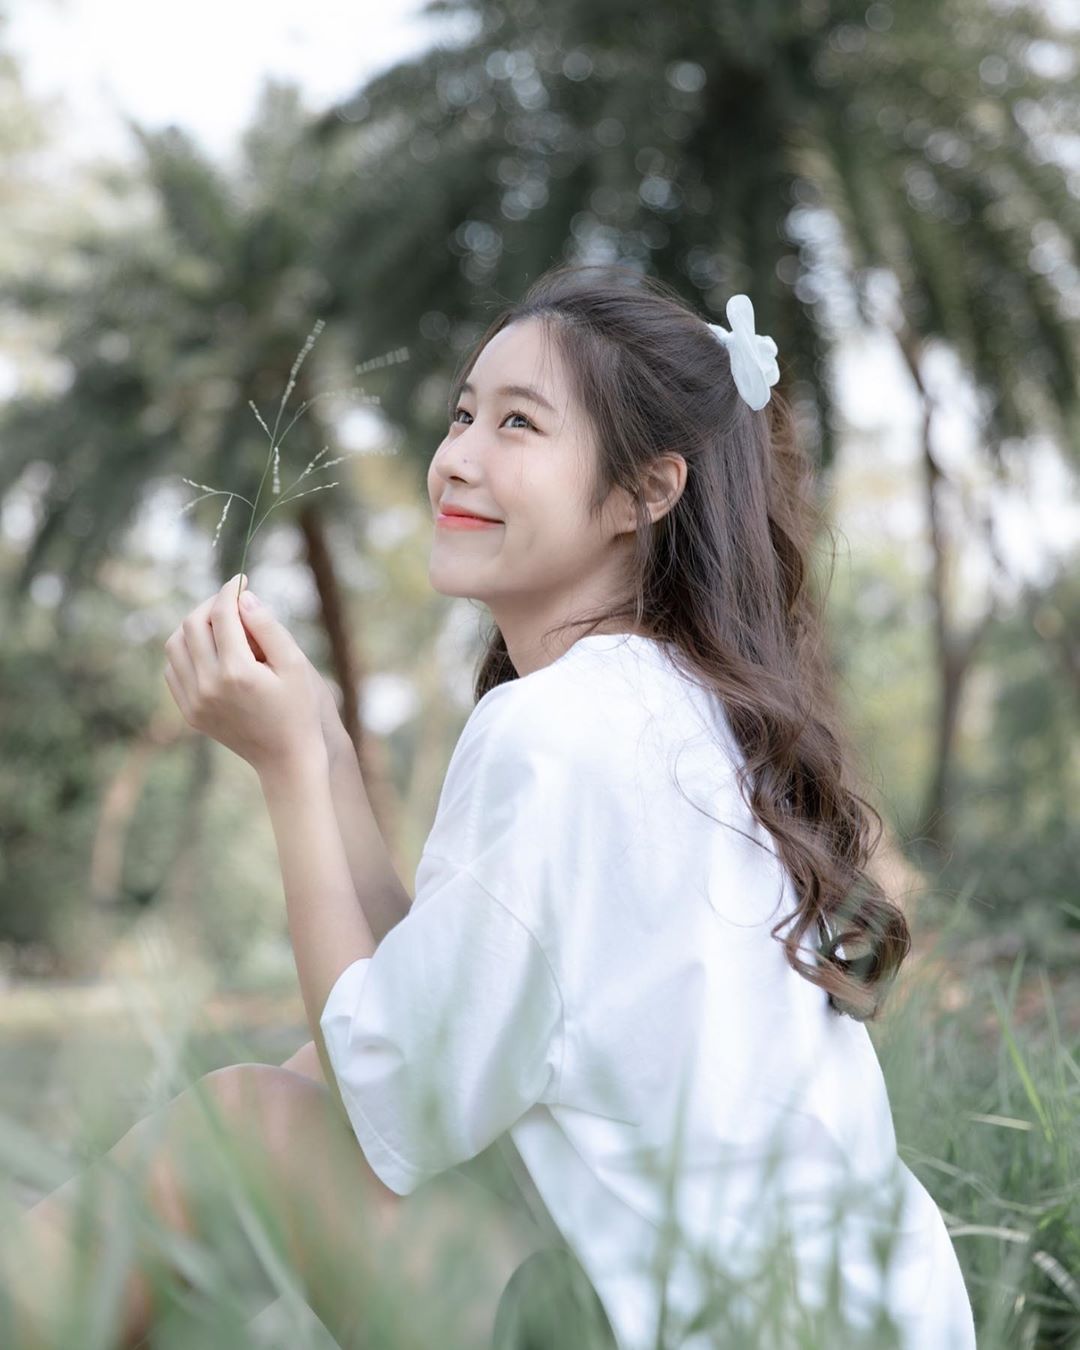 Apichaya Saejung – Most Beautiful Thai Girls - Thai Ladies